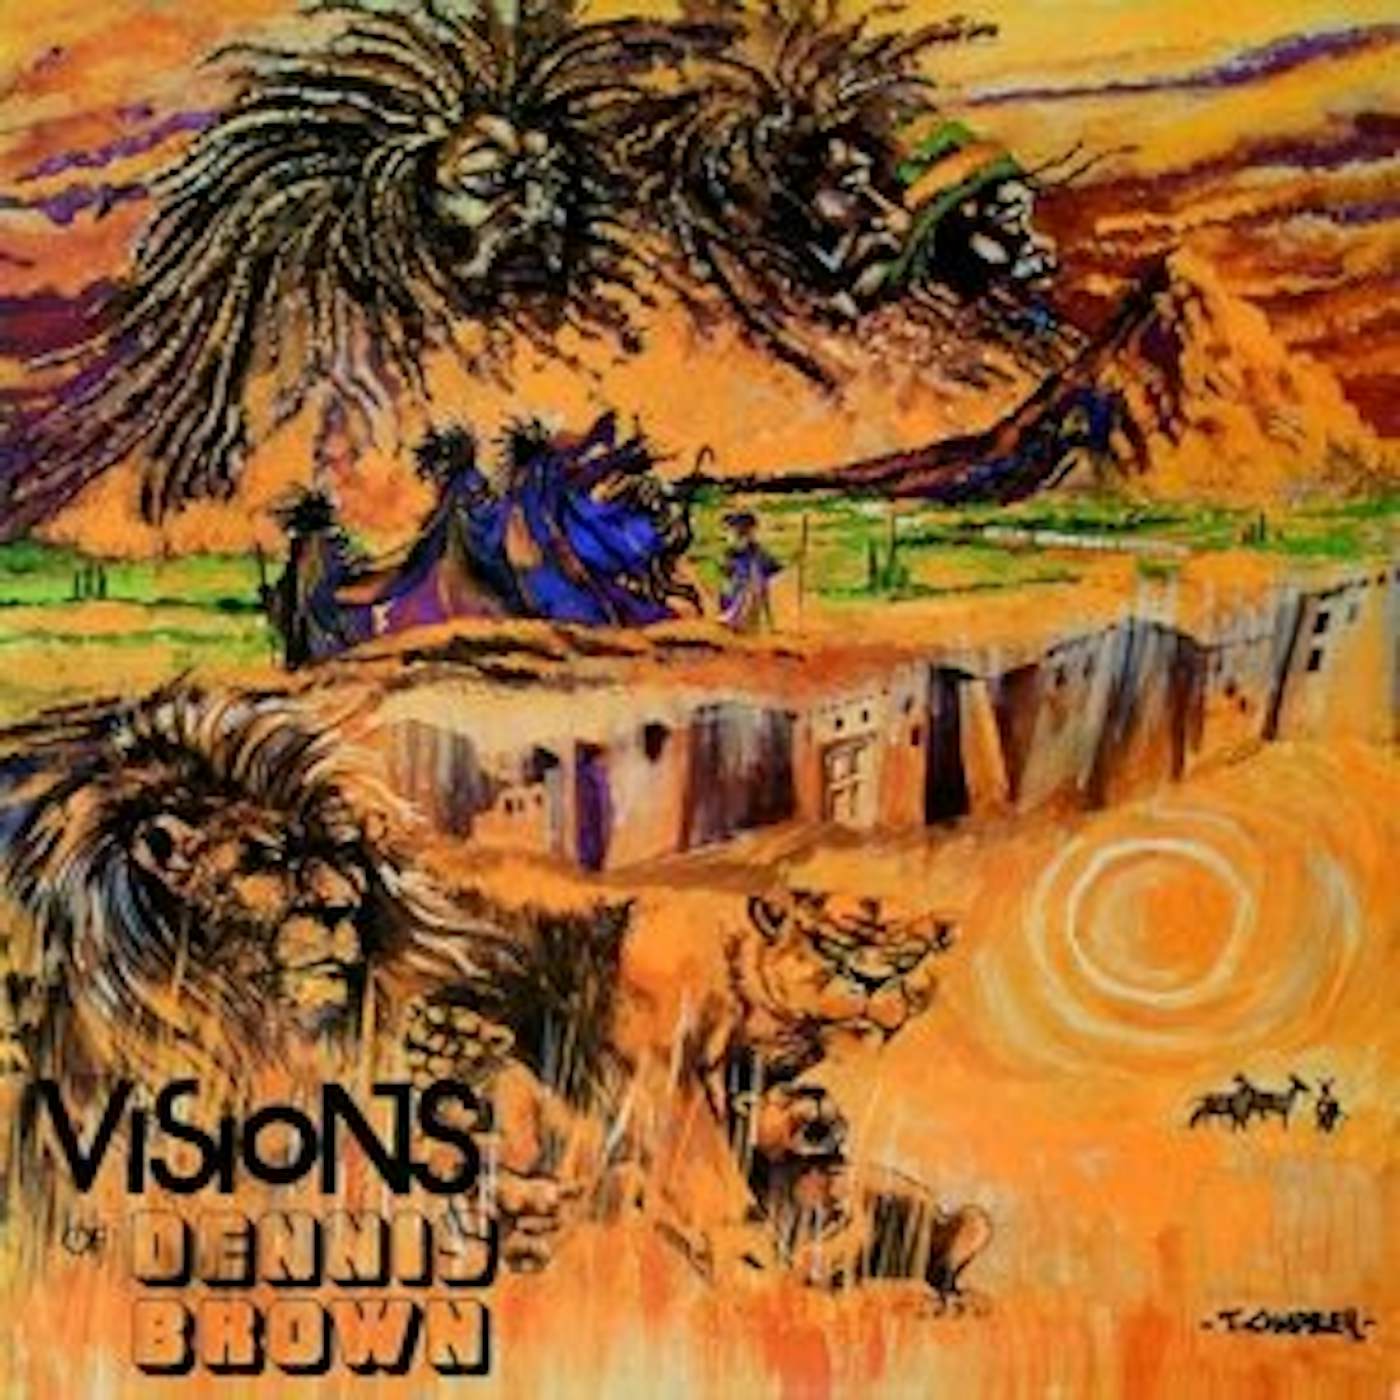 VISION OF DENNIS BROWN Vinyl Record